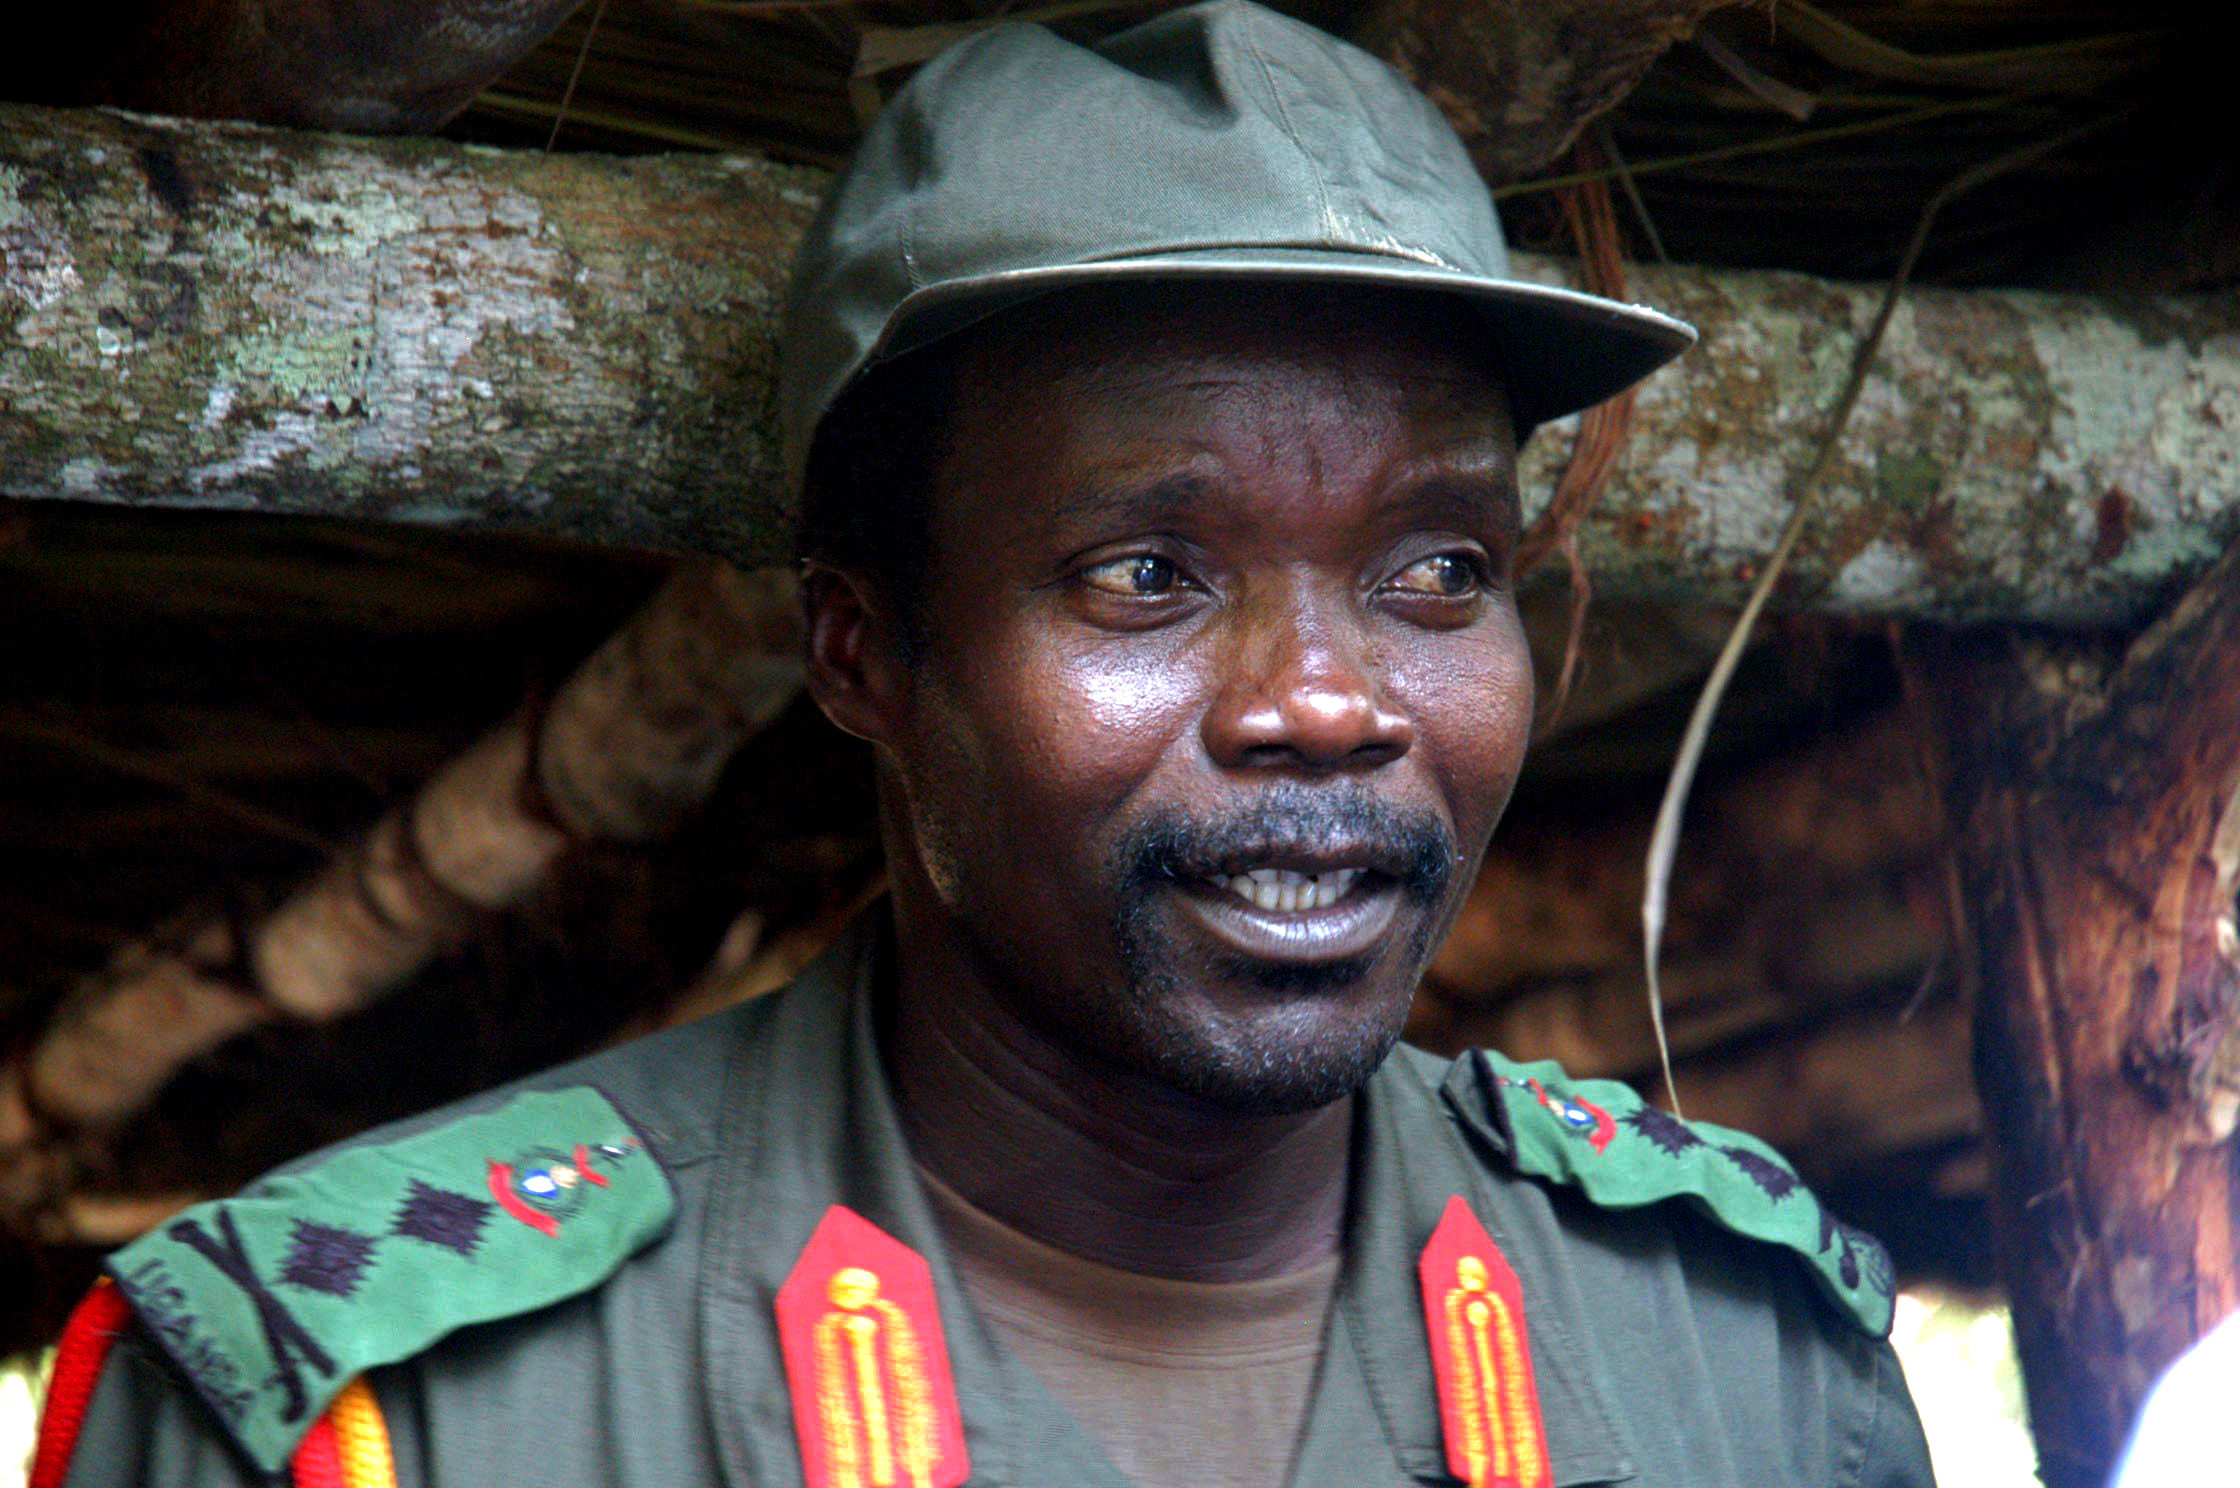 Borgmästare, Böter, Joseph Kony